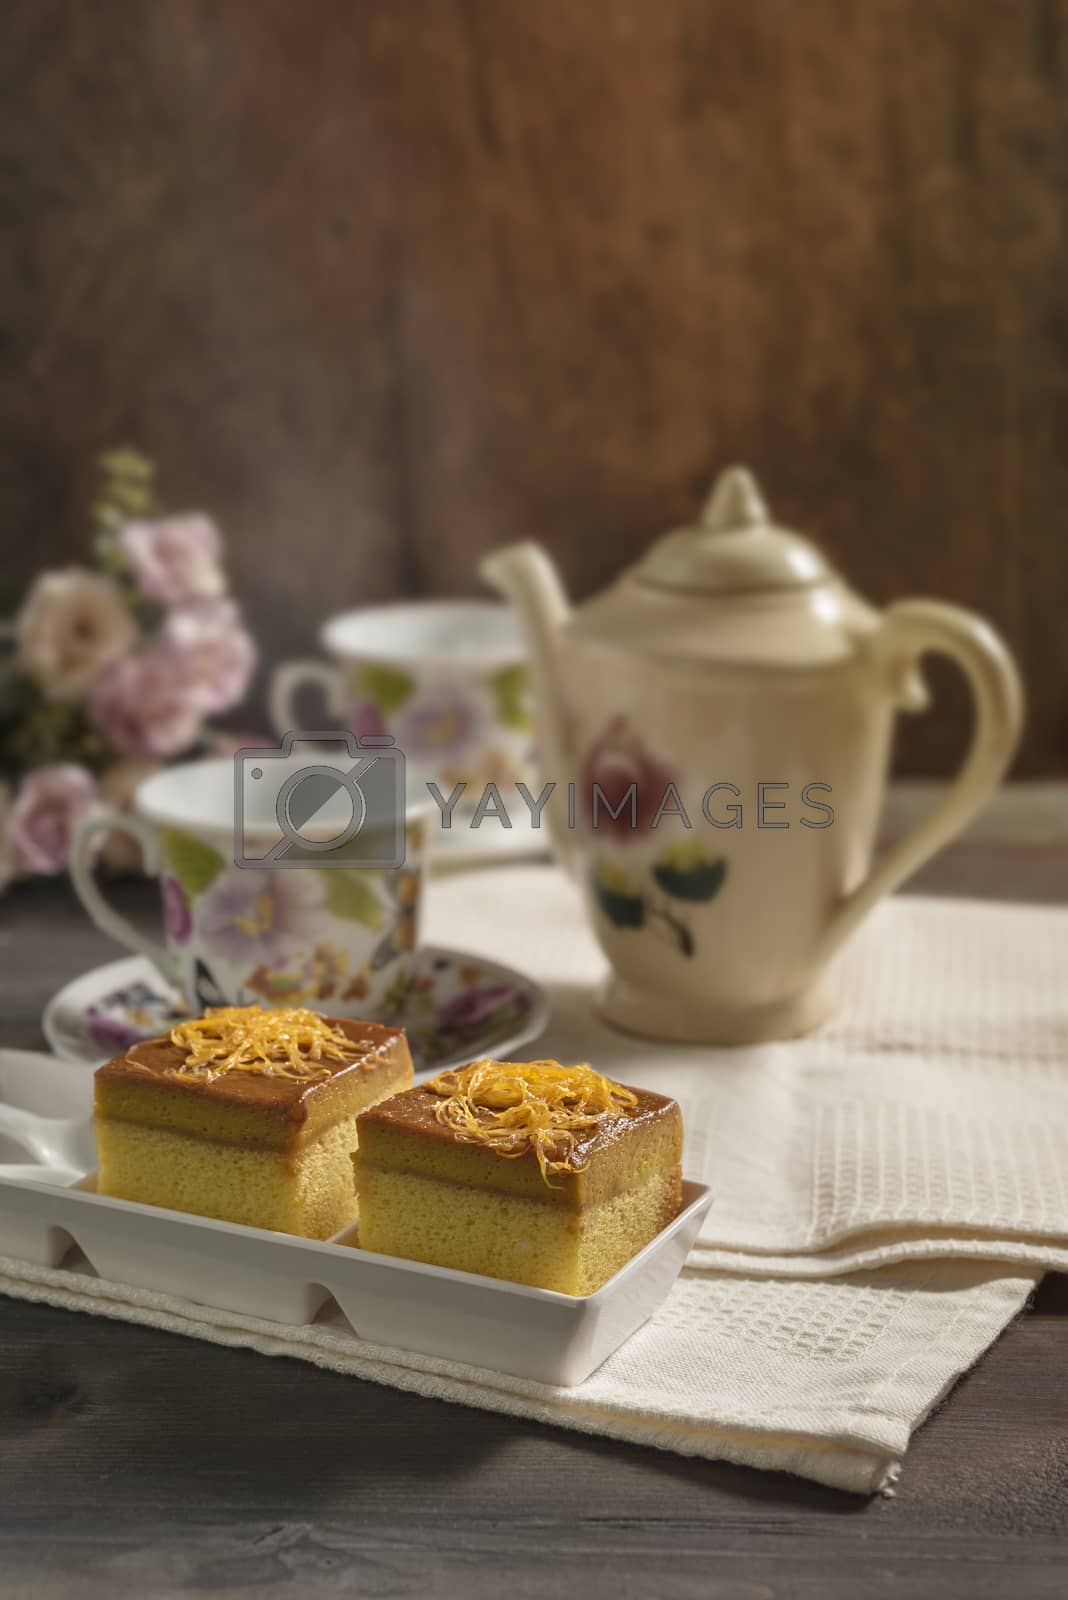 Royalty free image of hot tea and sweet cake by rakratchada